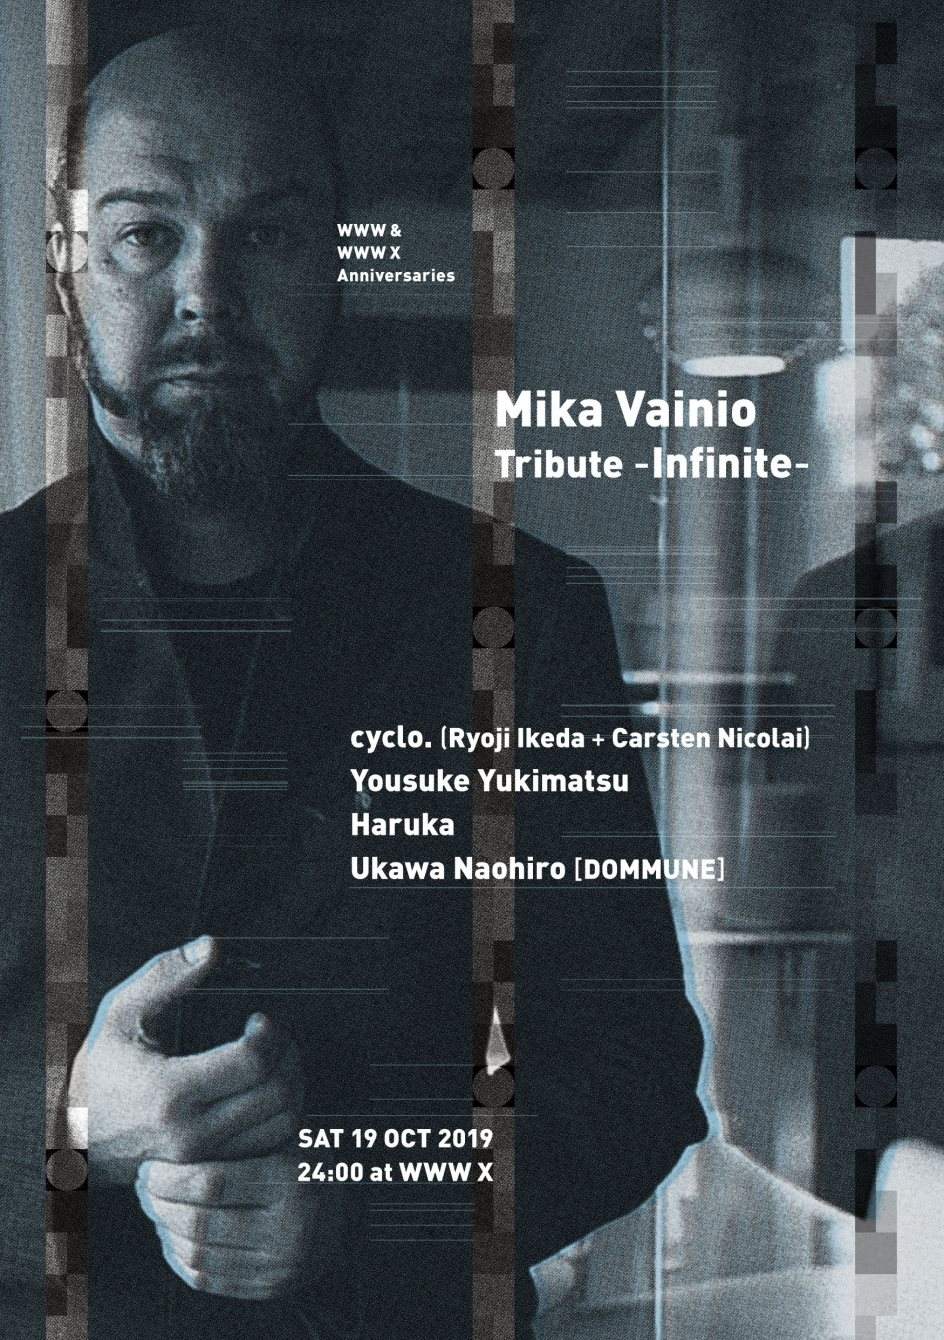 Mika Vainio Tribute - Infinite - with Cyclo. WWW & WWW X Anniversaries - フライヤー表